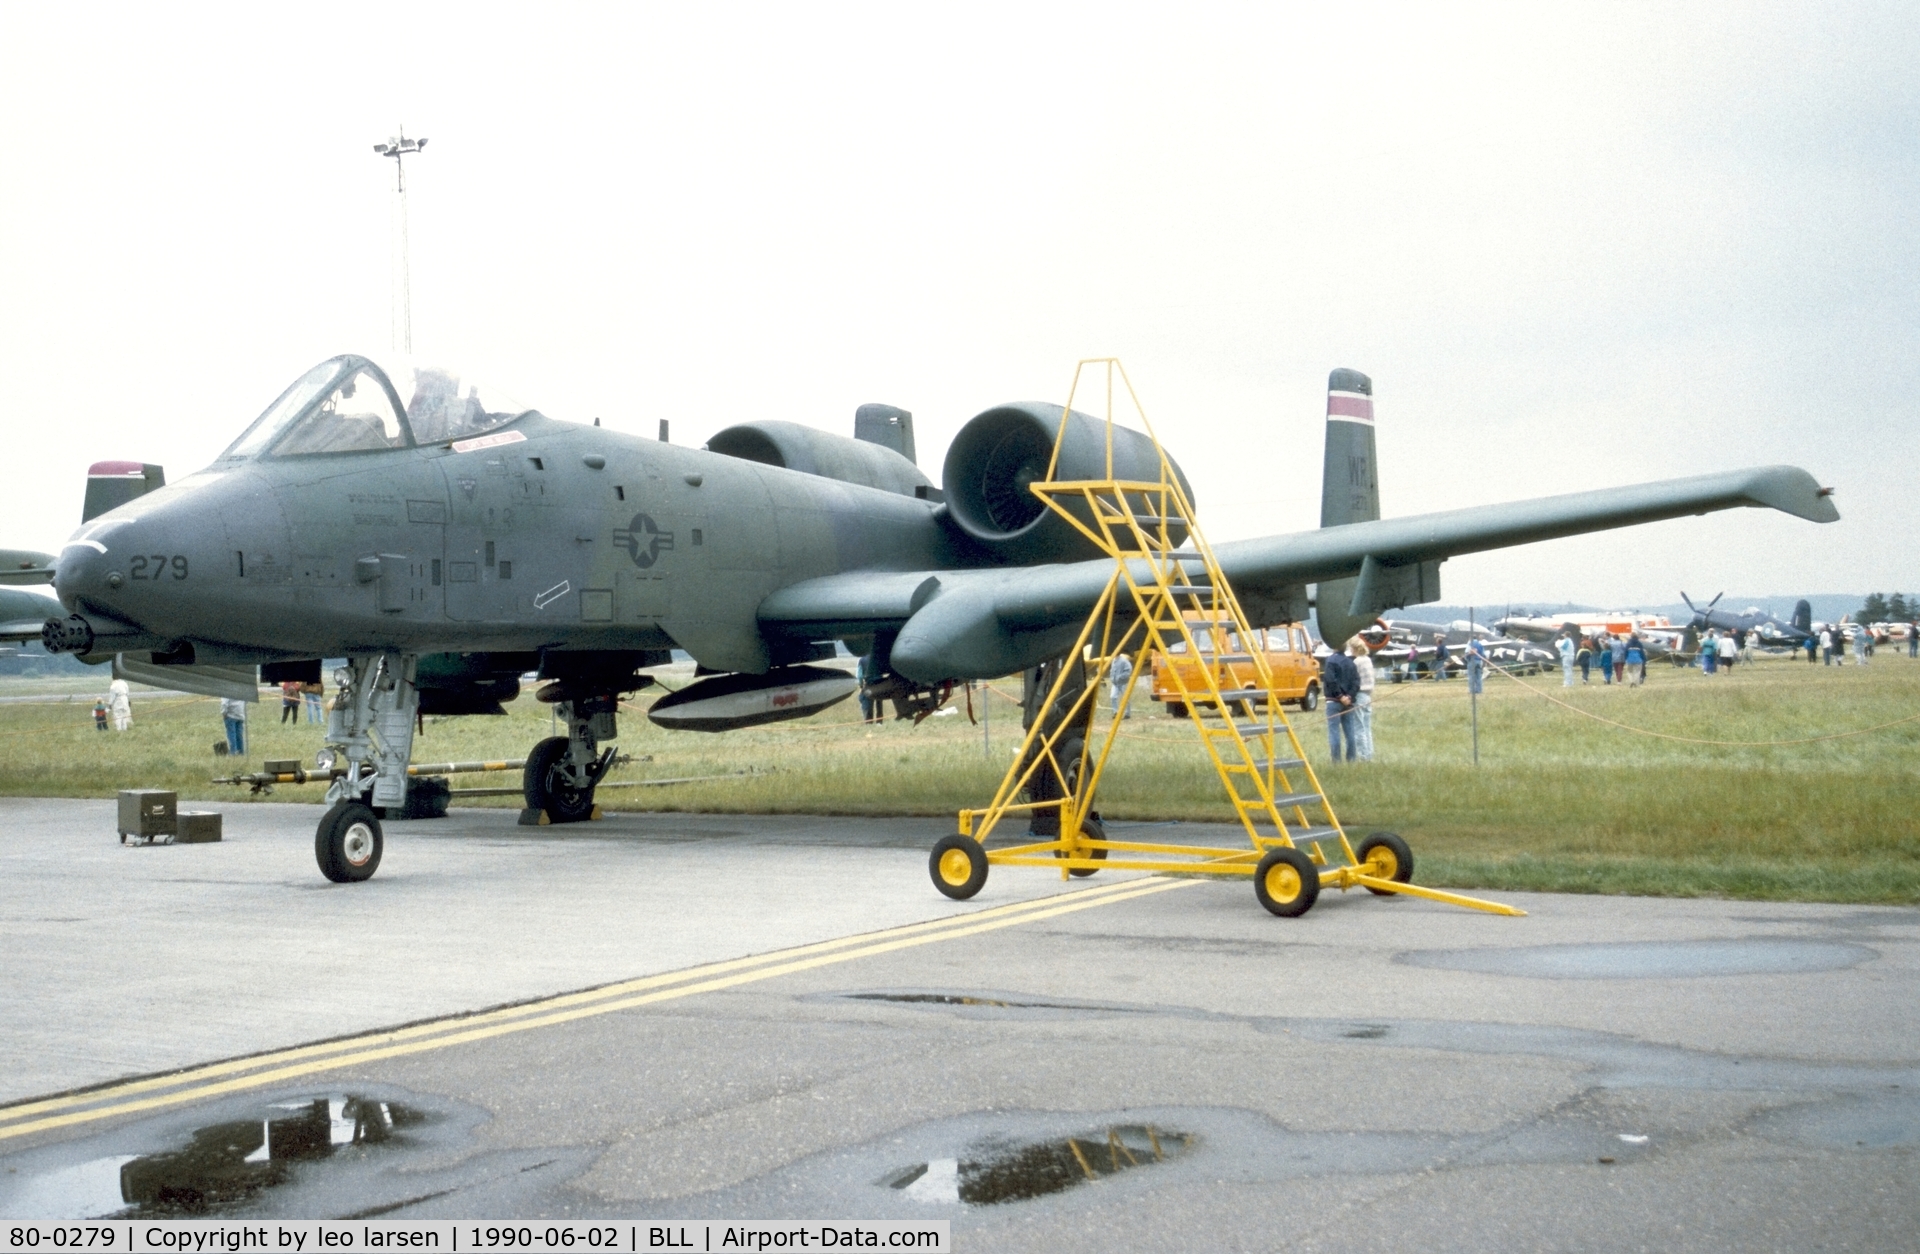 80-0279, 1980 Fairchild Republic A-10A Thunderbolt II C/N A10-0629, Billund 2.6.1990